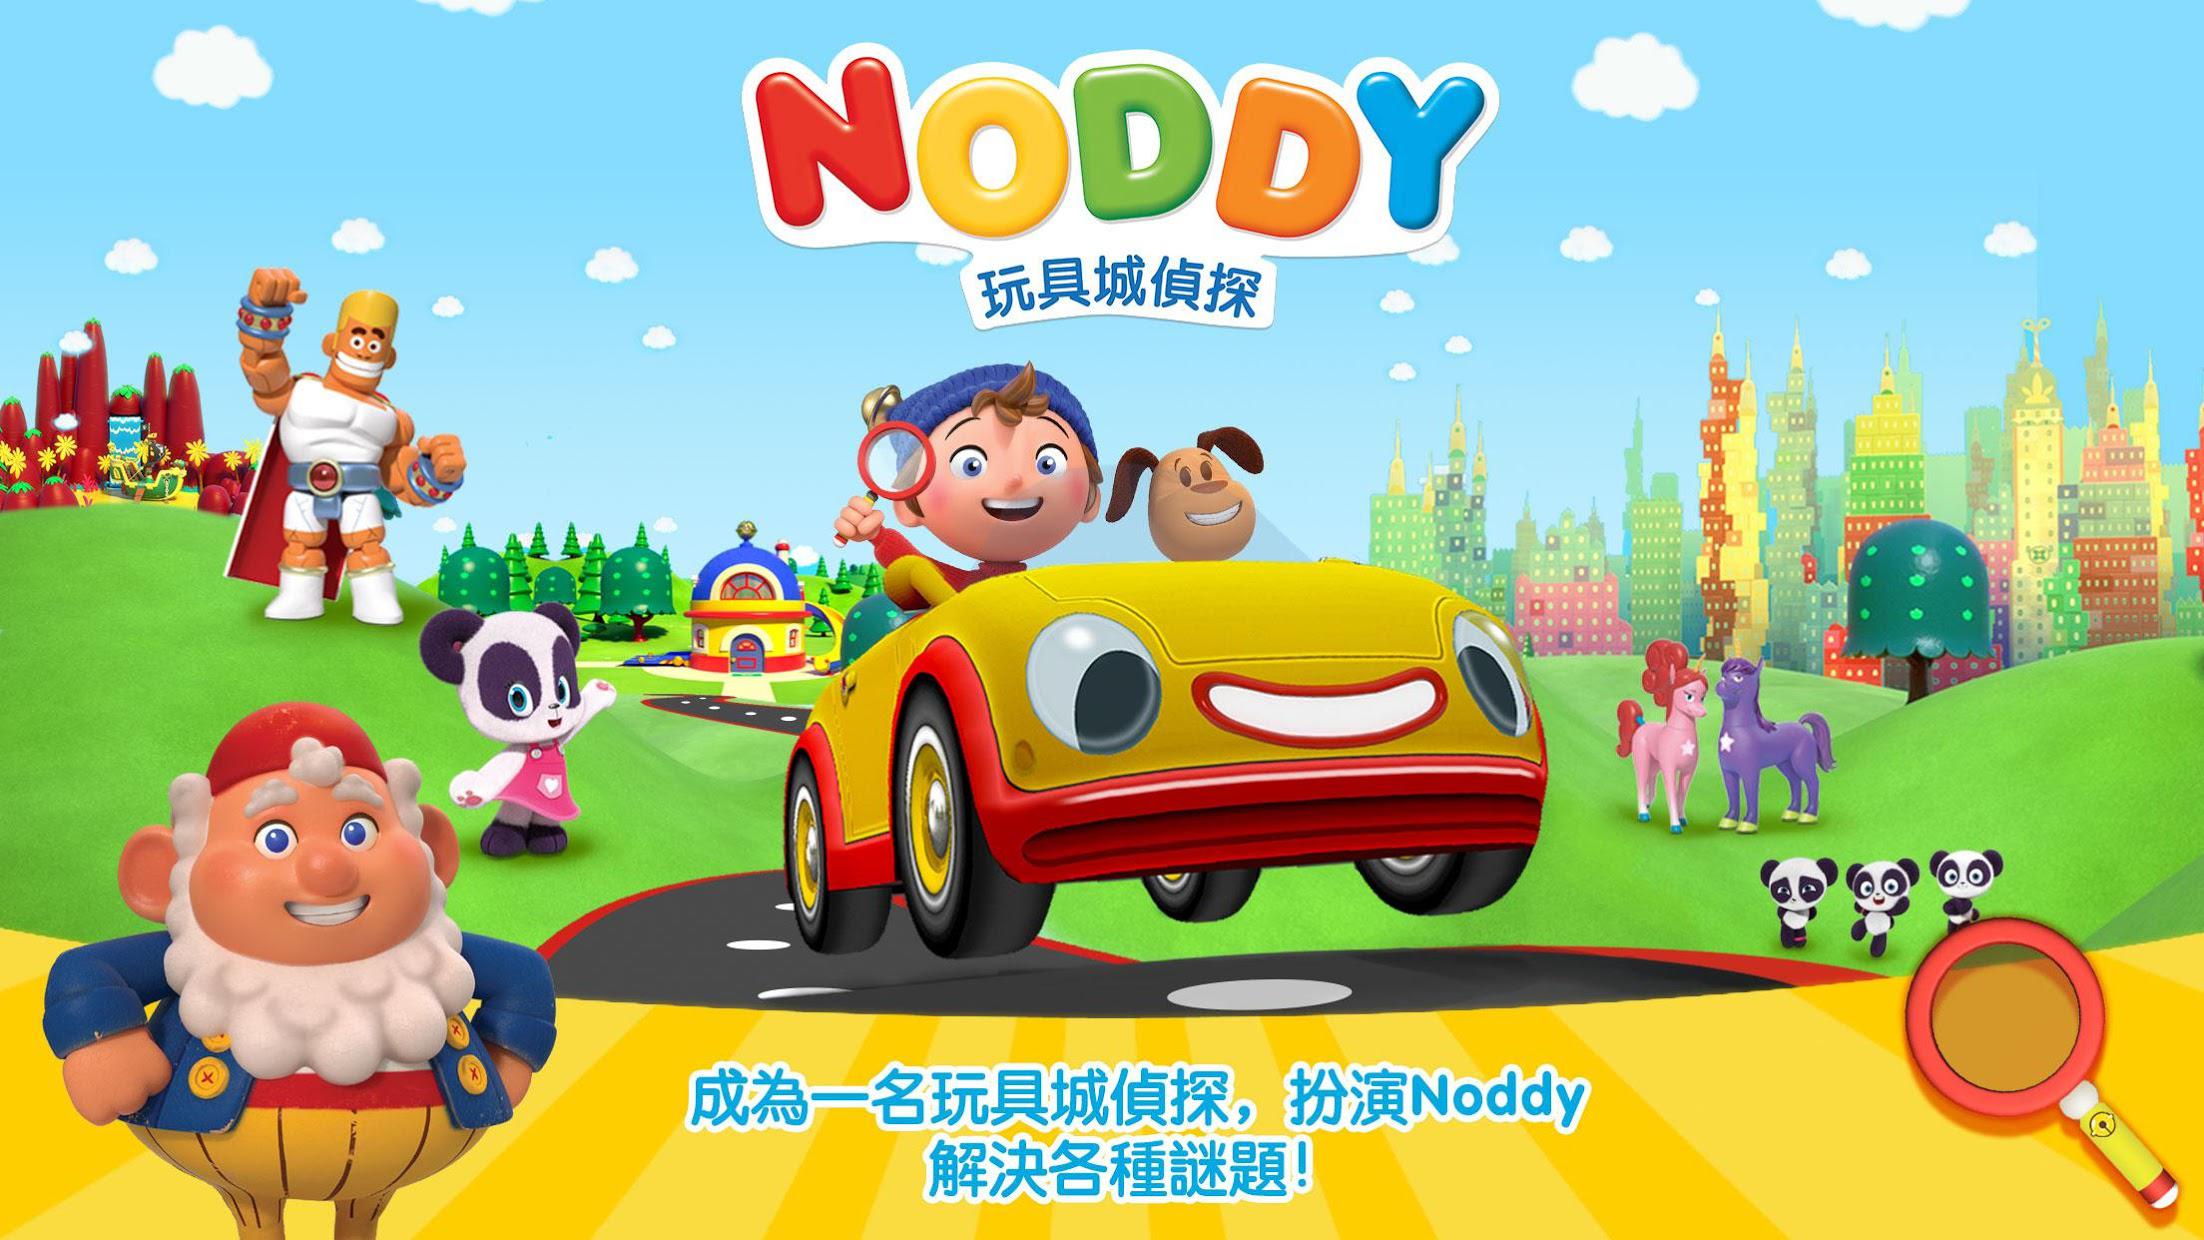 Noddy - 玩具城侦探